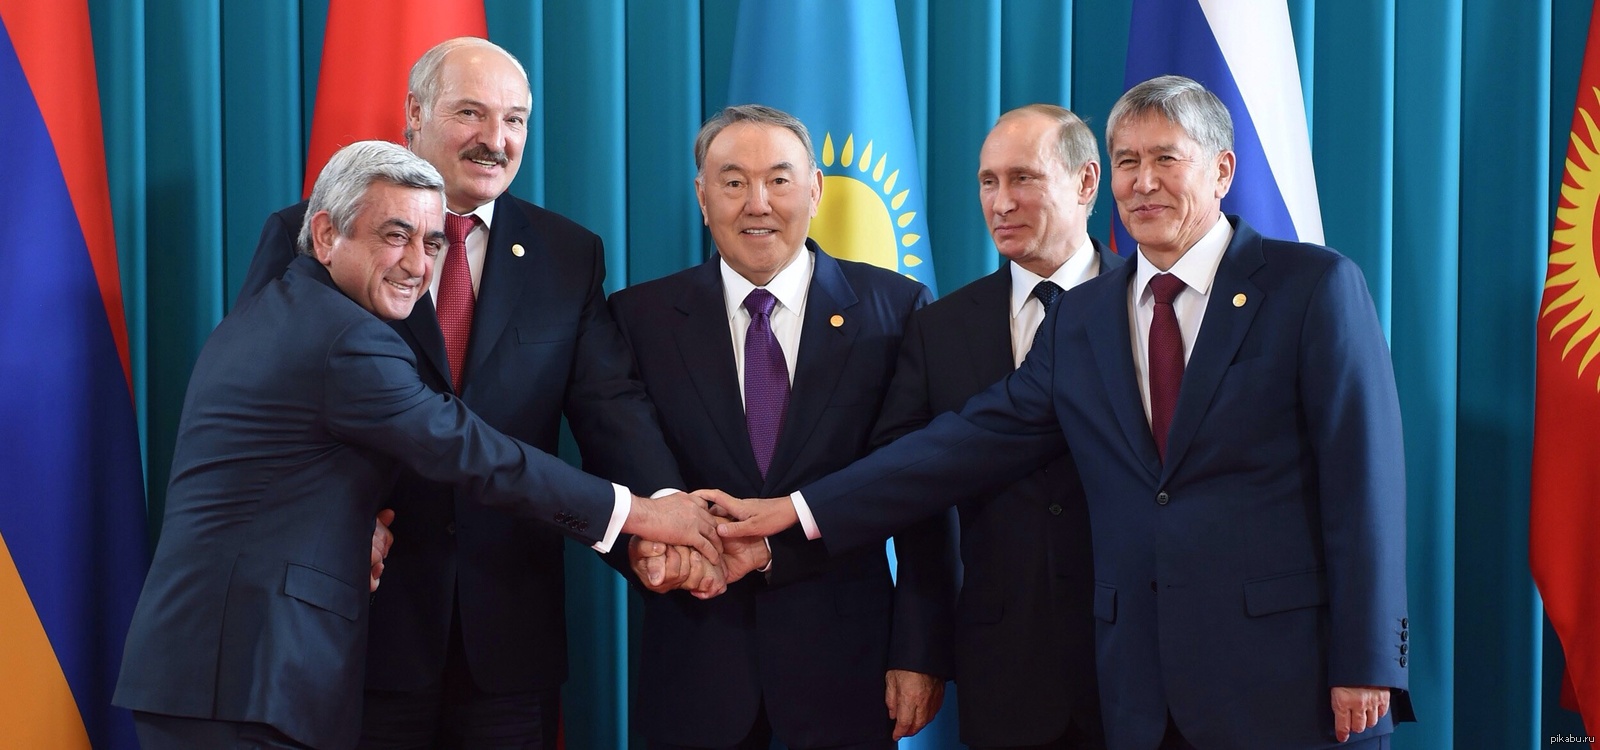 Многовекторная политика. ЕАЭС визит Нурсултана Назарбаева 1994. Казахстан на международной арене. Международное сотрудничество.